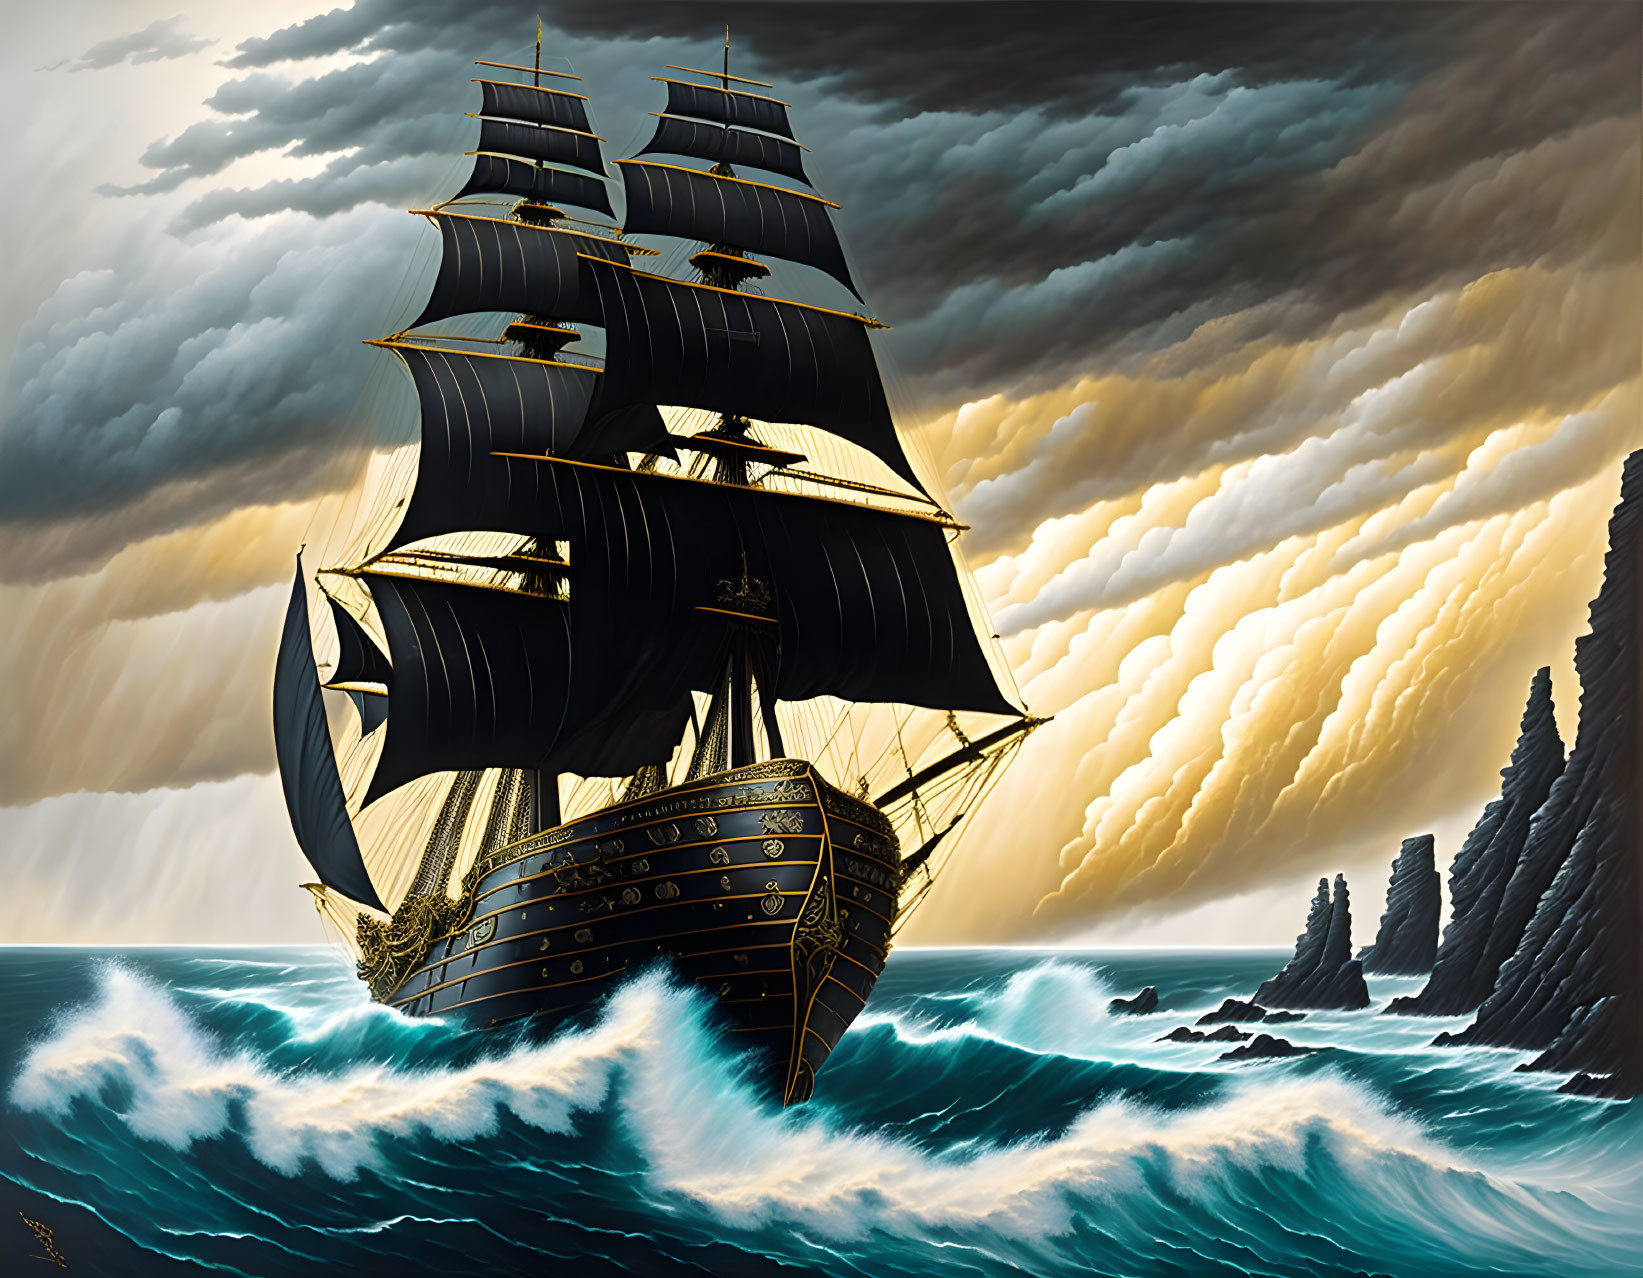 Tall ship sailing stormy seas near jagged cliffs